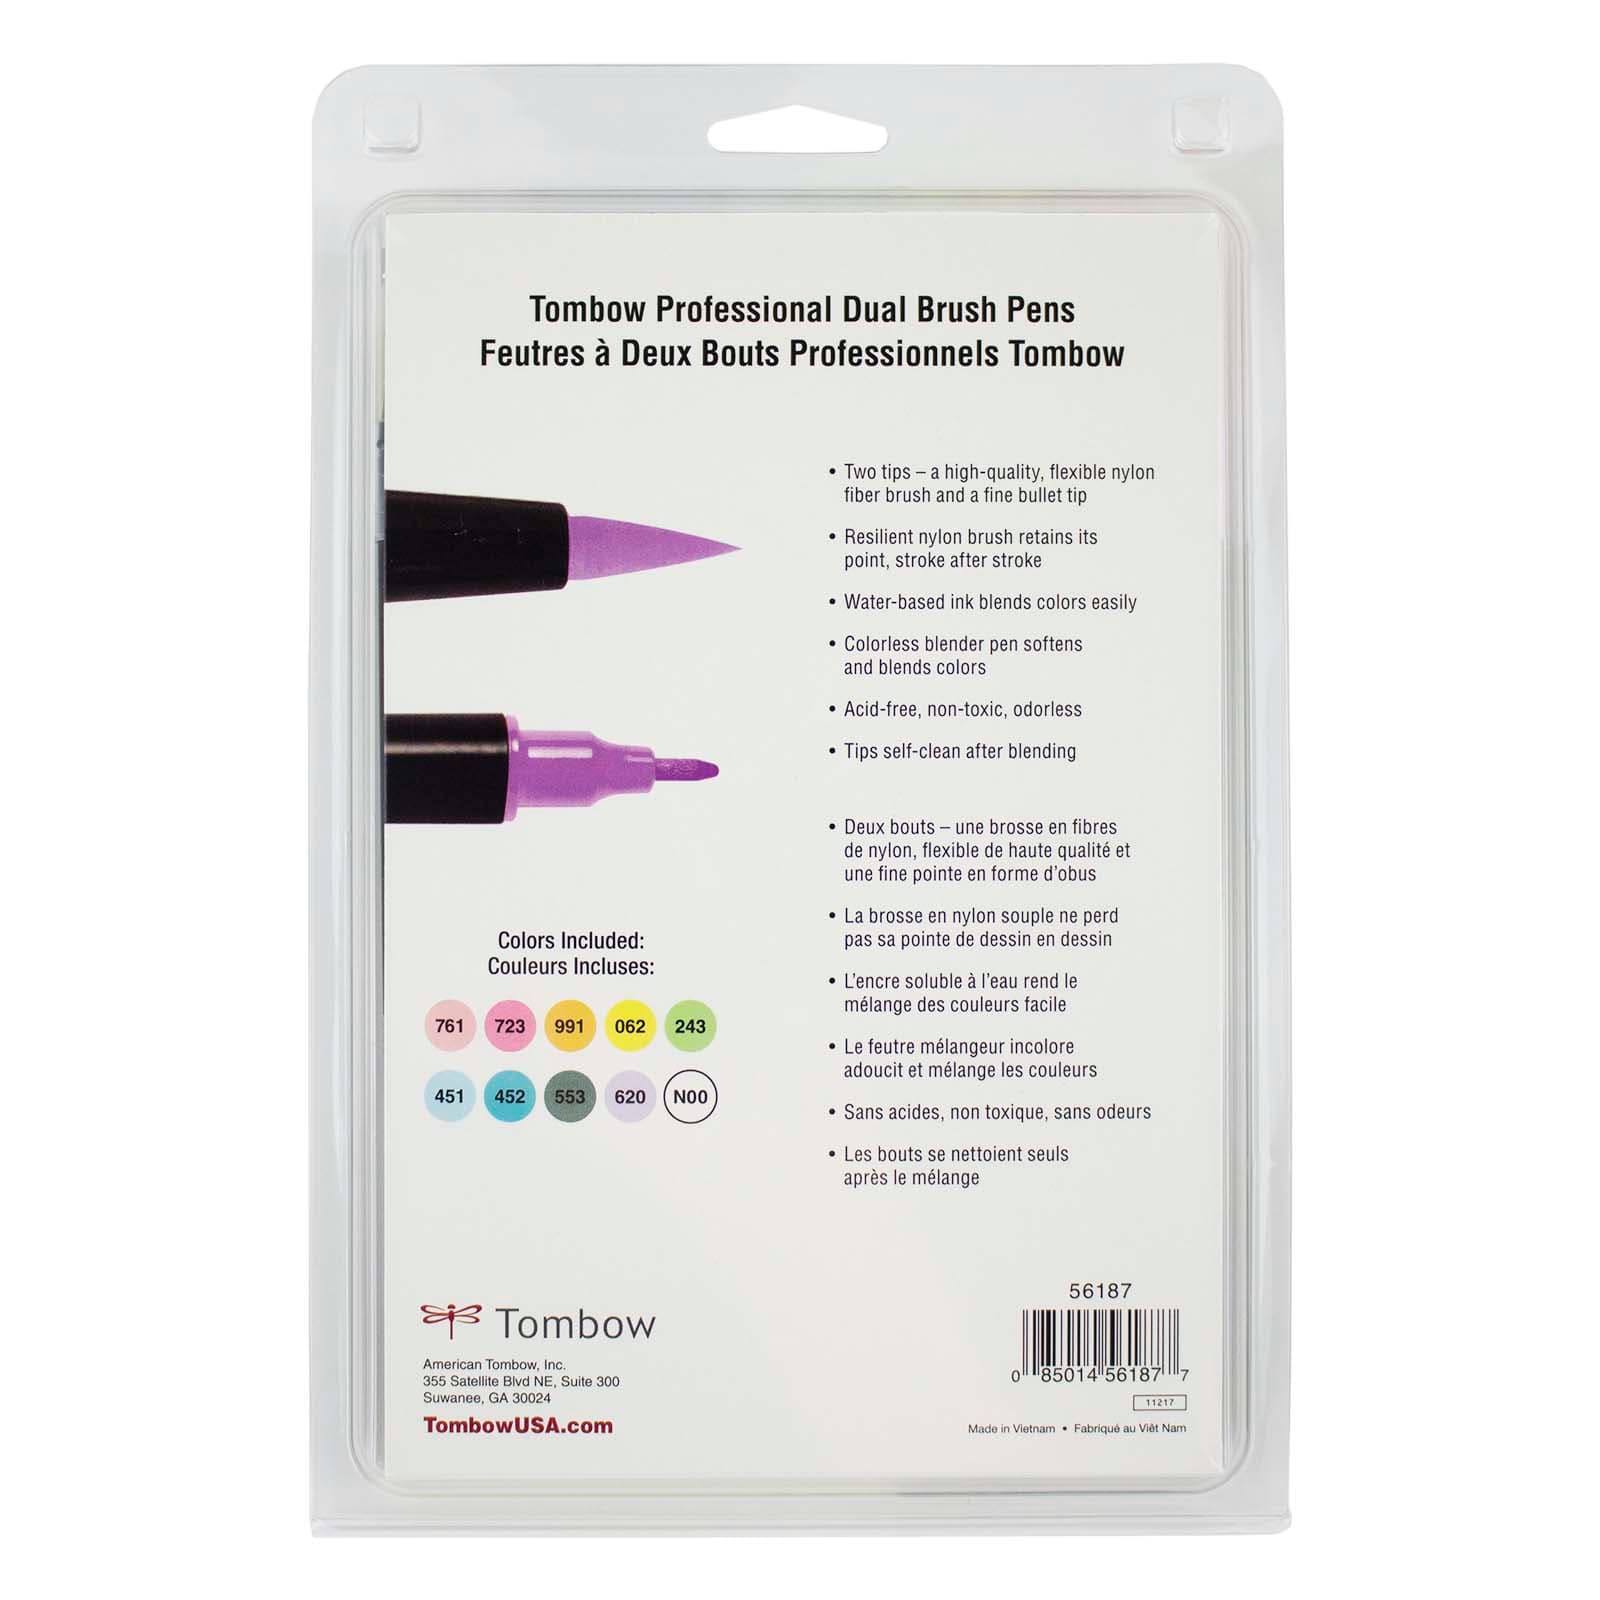 9 Packs: 10 ct. (90 total) Tombow Pastel Dual Brush Pens